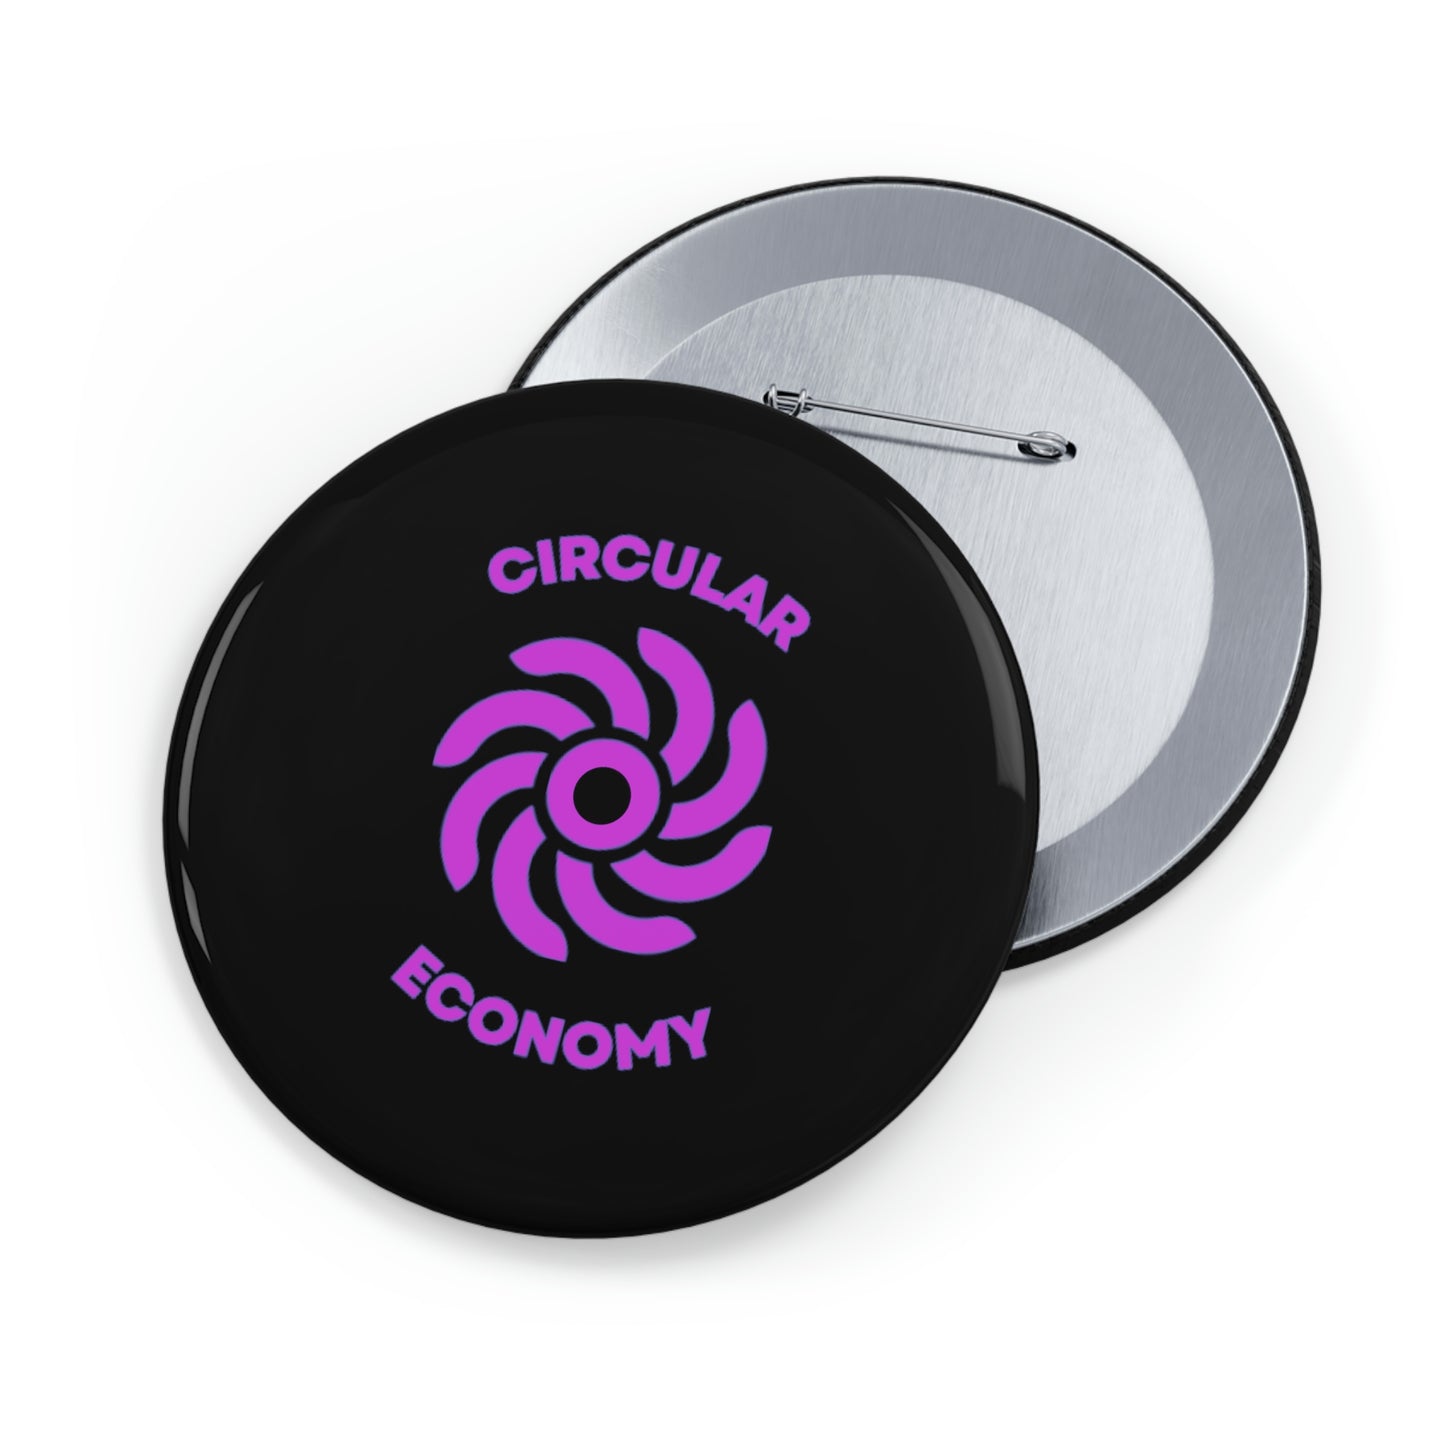 CIRCULAR ECONOMY - Round Pins